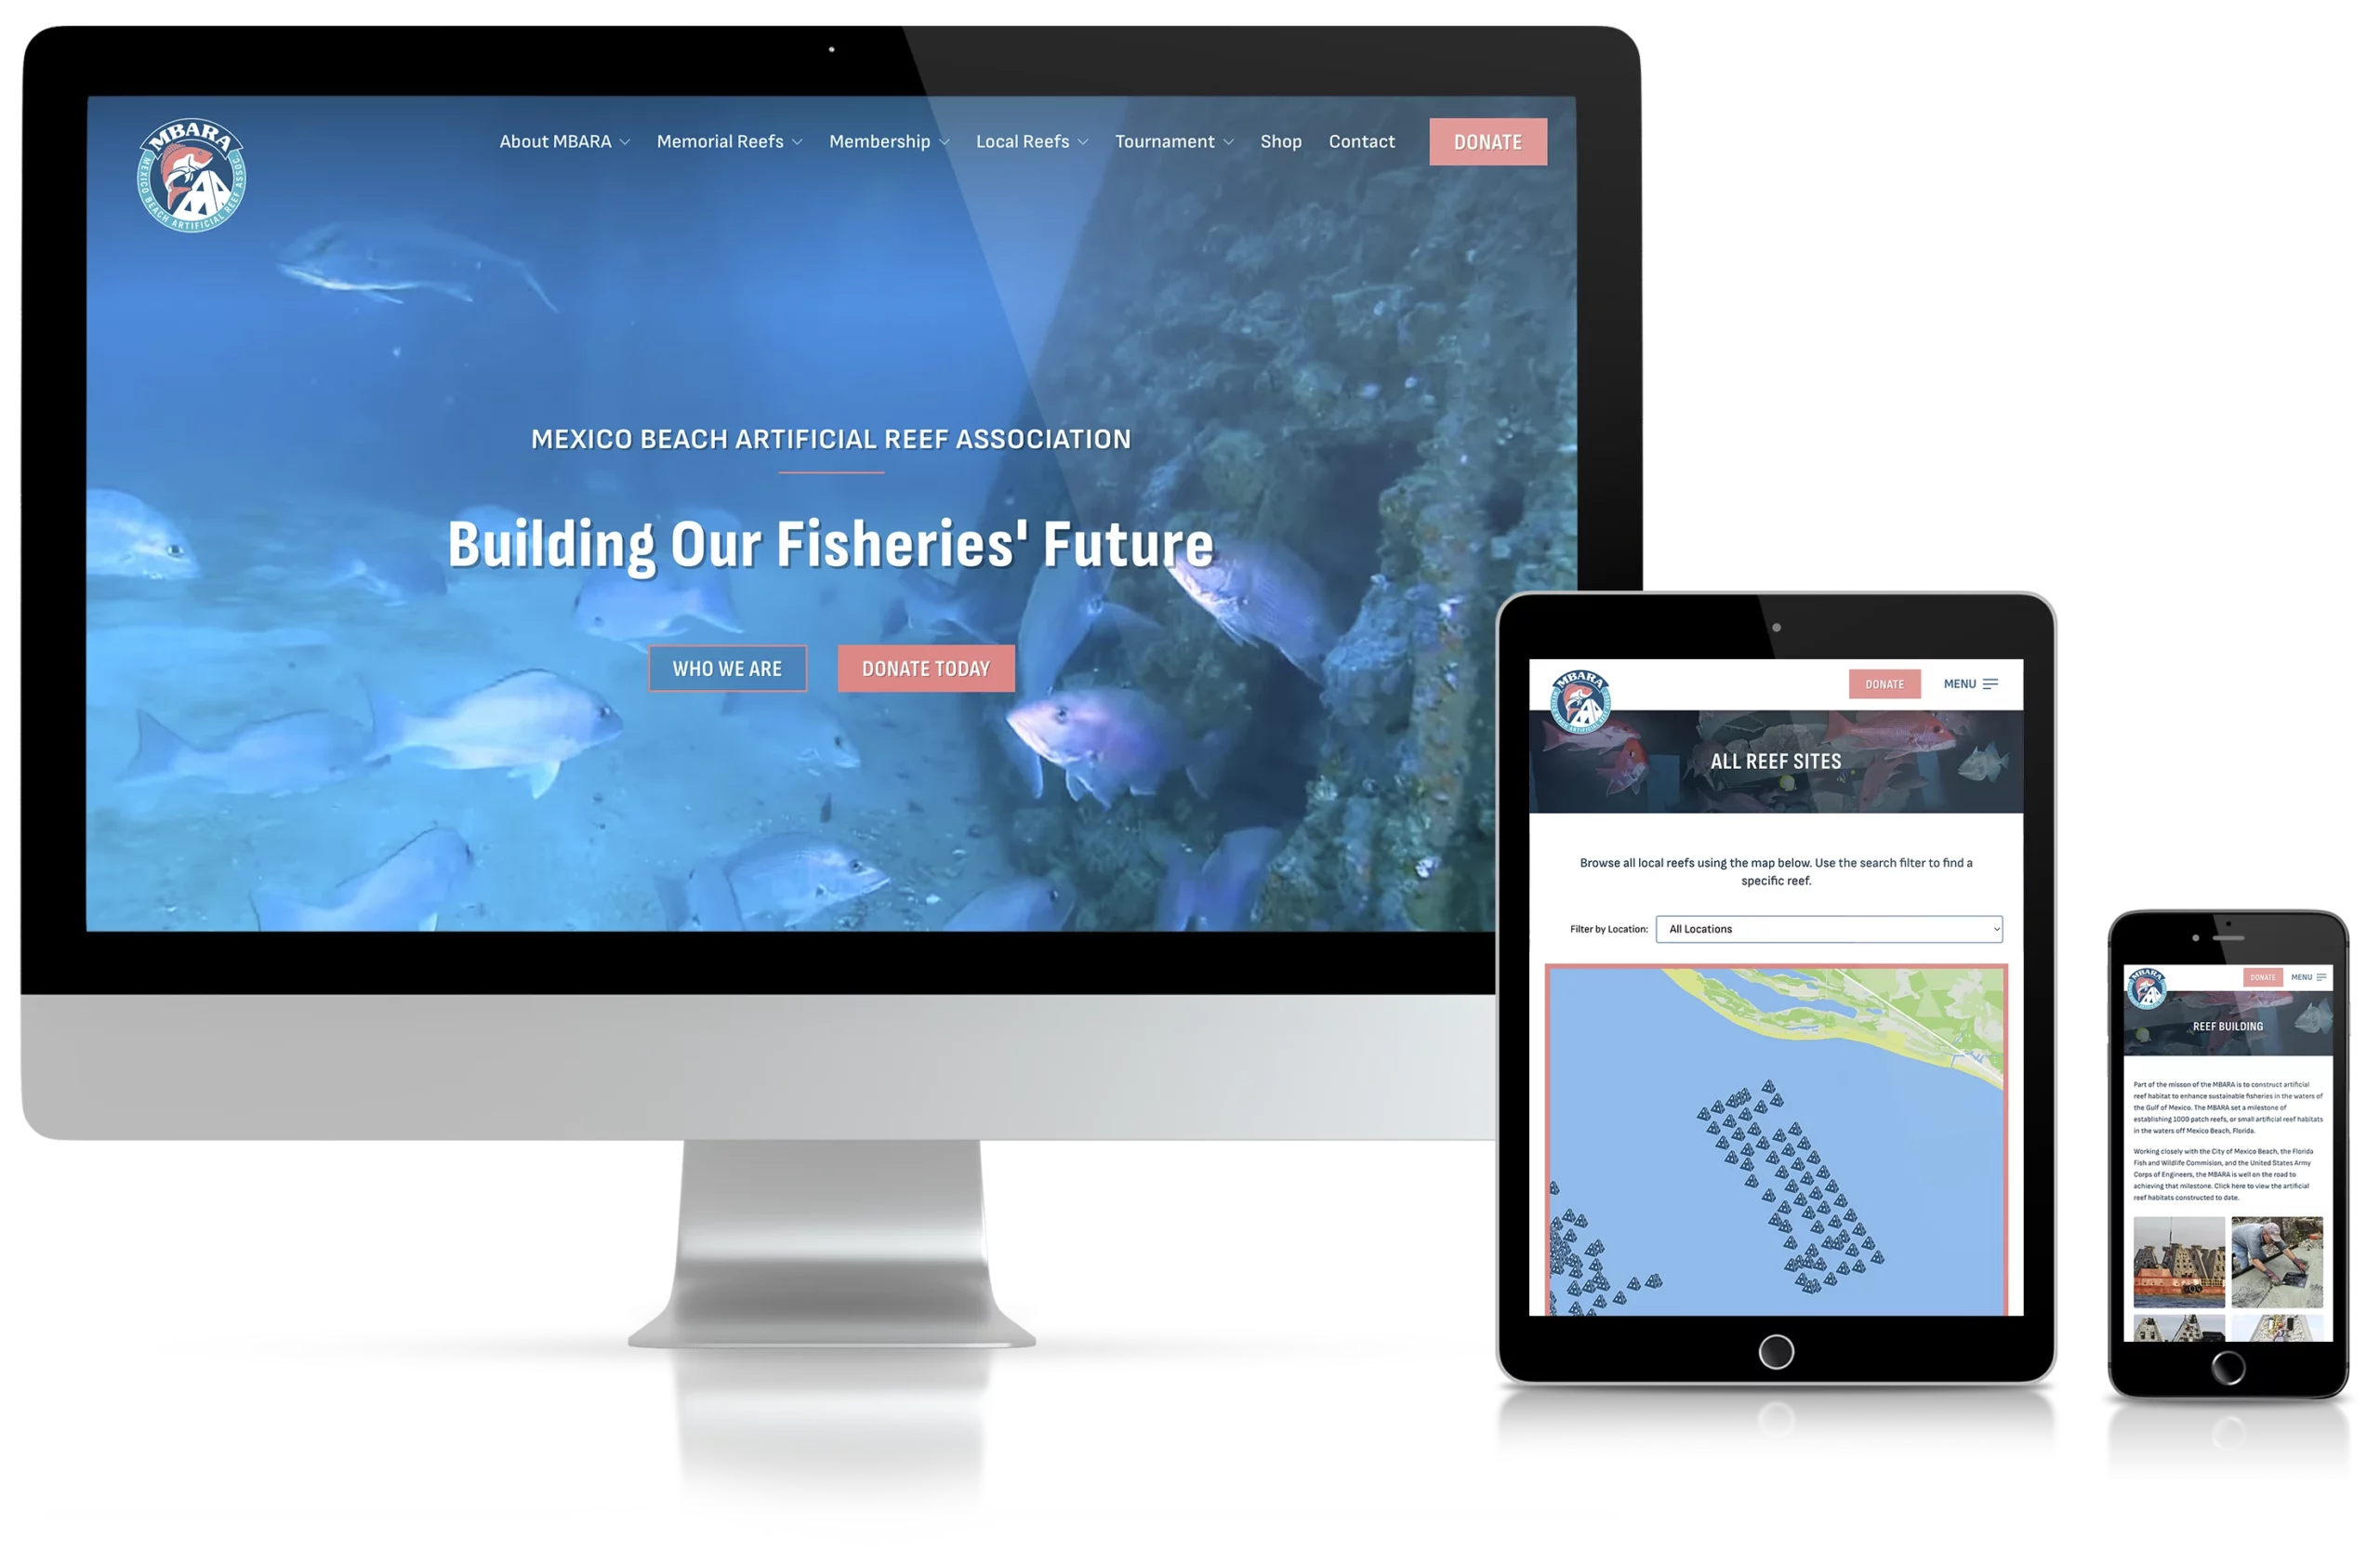 Responsive web design for MBARA website